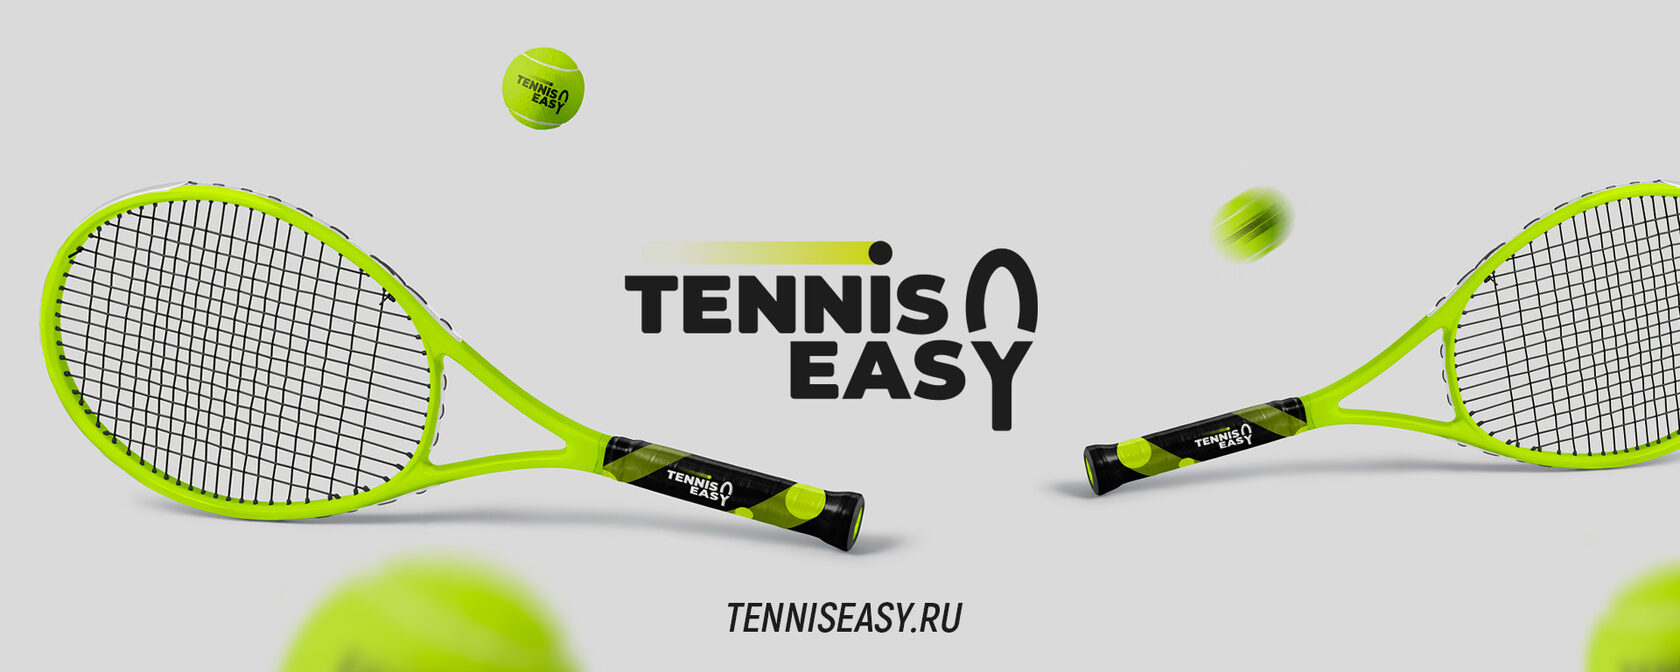 Теннис-клуб TennisEasy